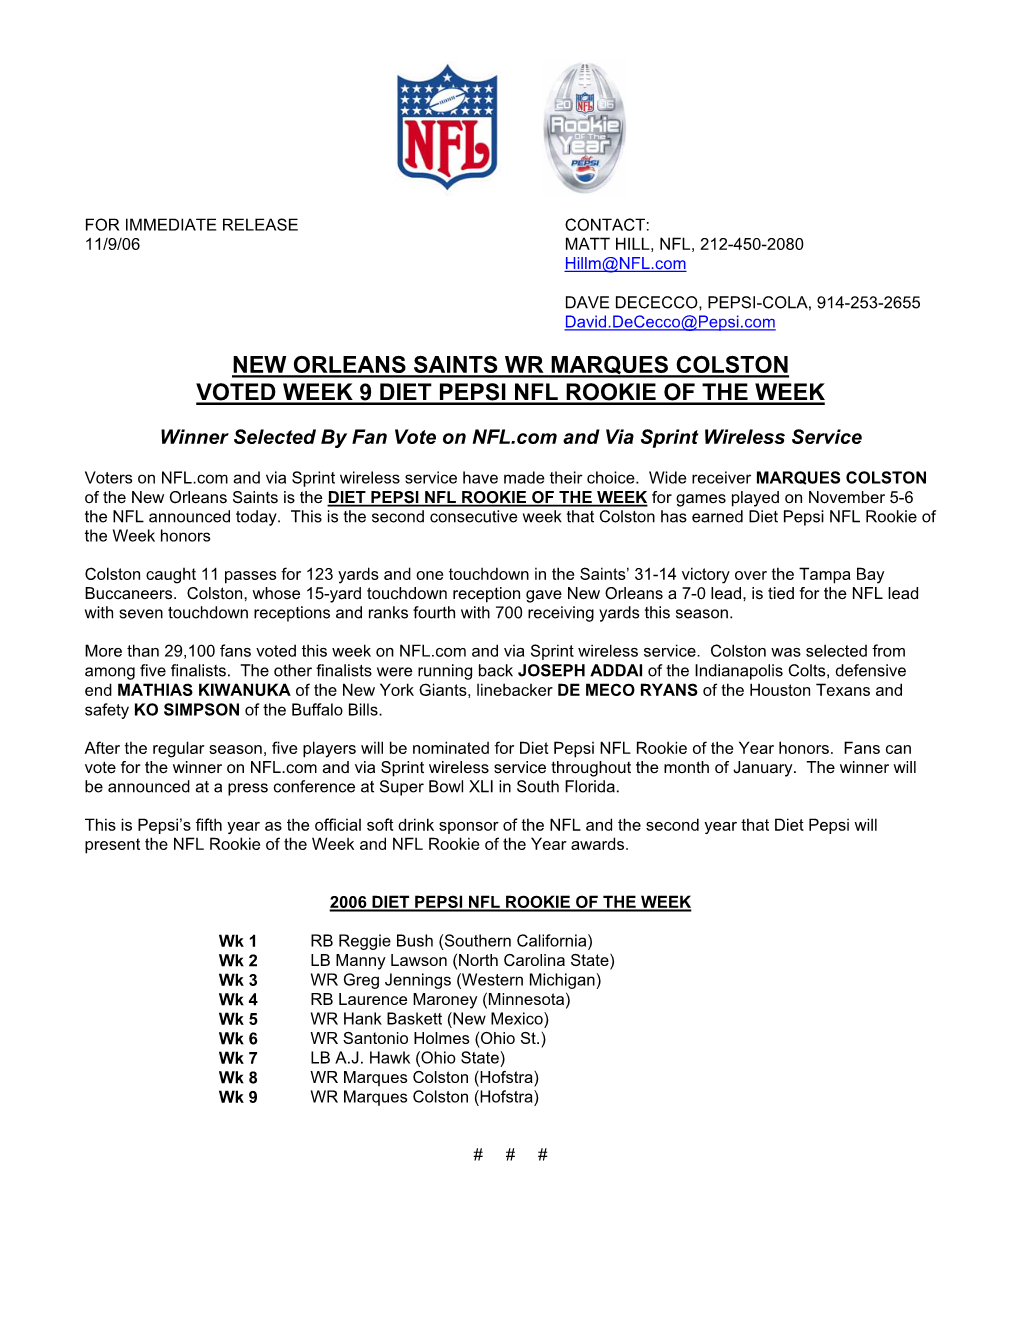 New Orleans Saints Wr Marques Colston Voted Week 9 Diet Pepsi Nfl Rookie of the Week